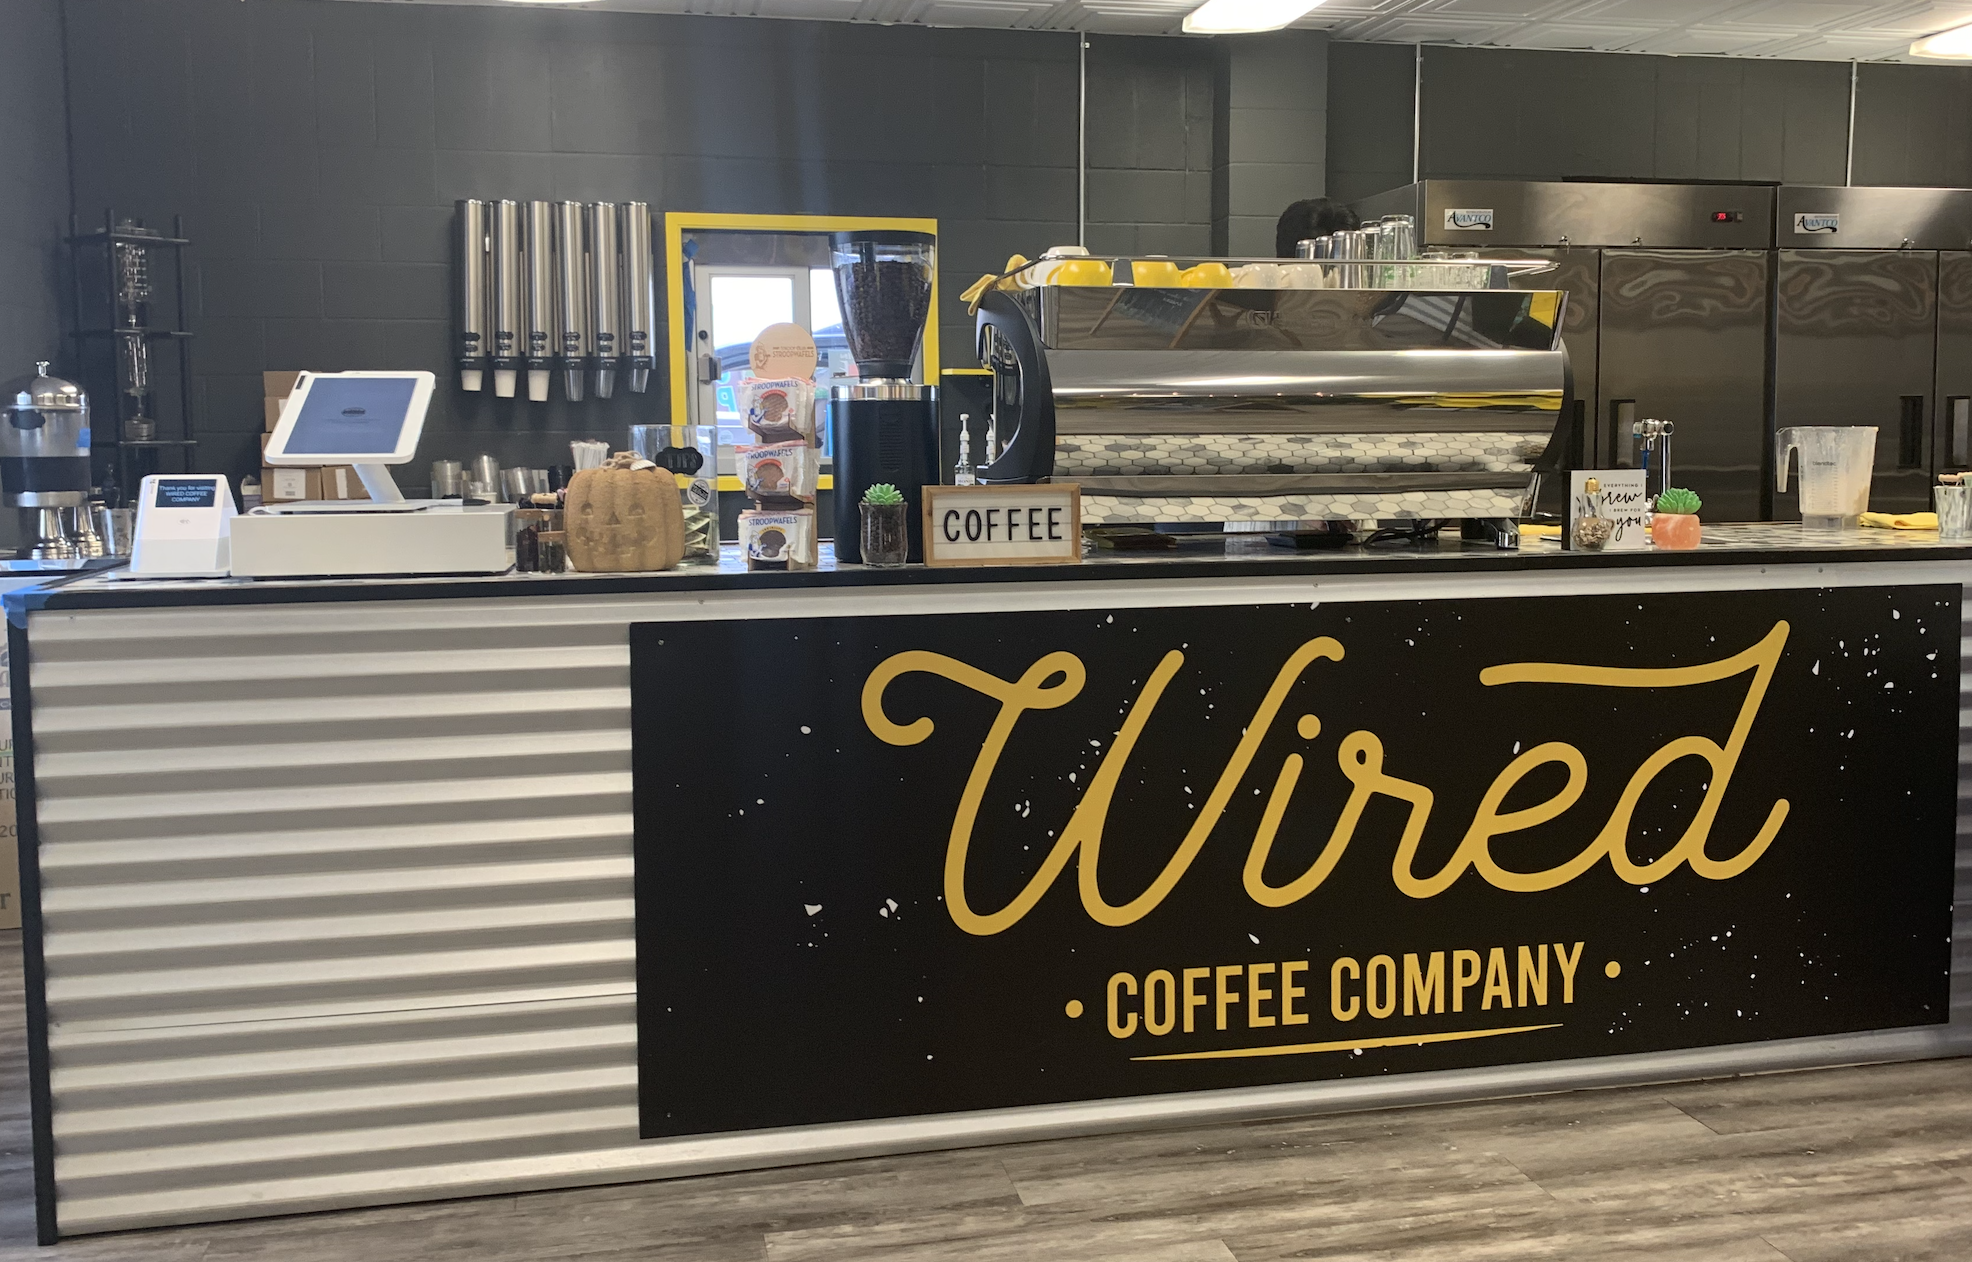 Wired Coffee Company